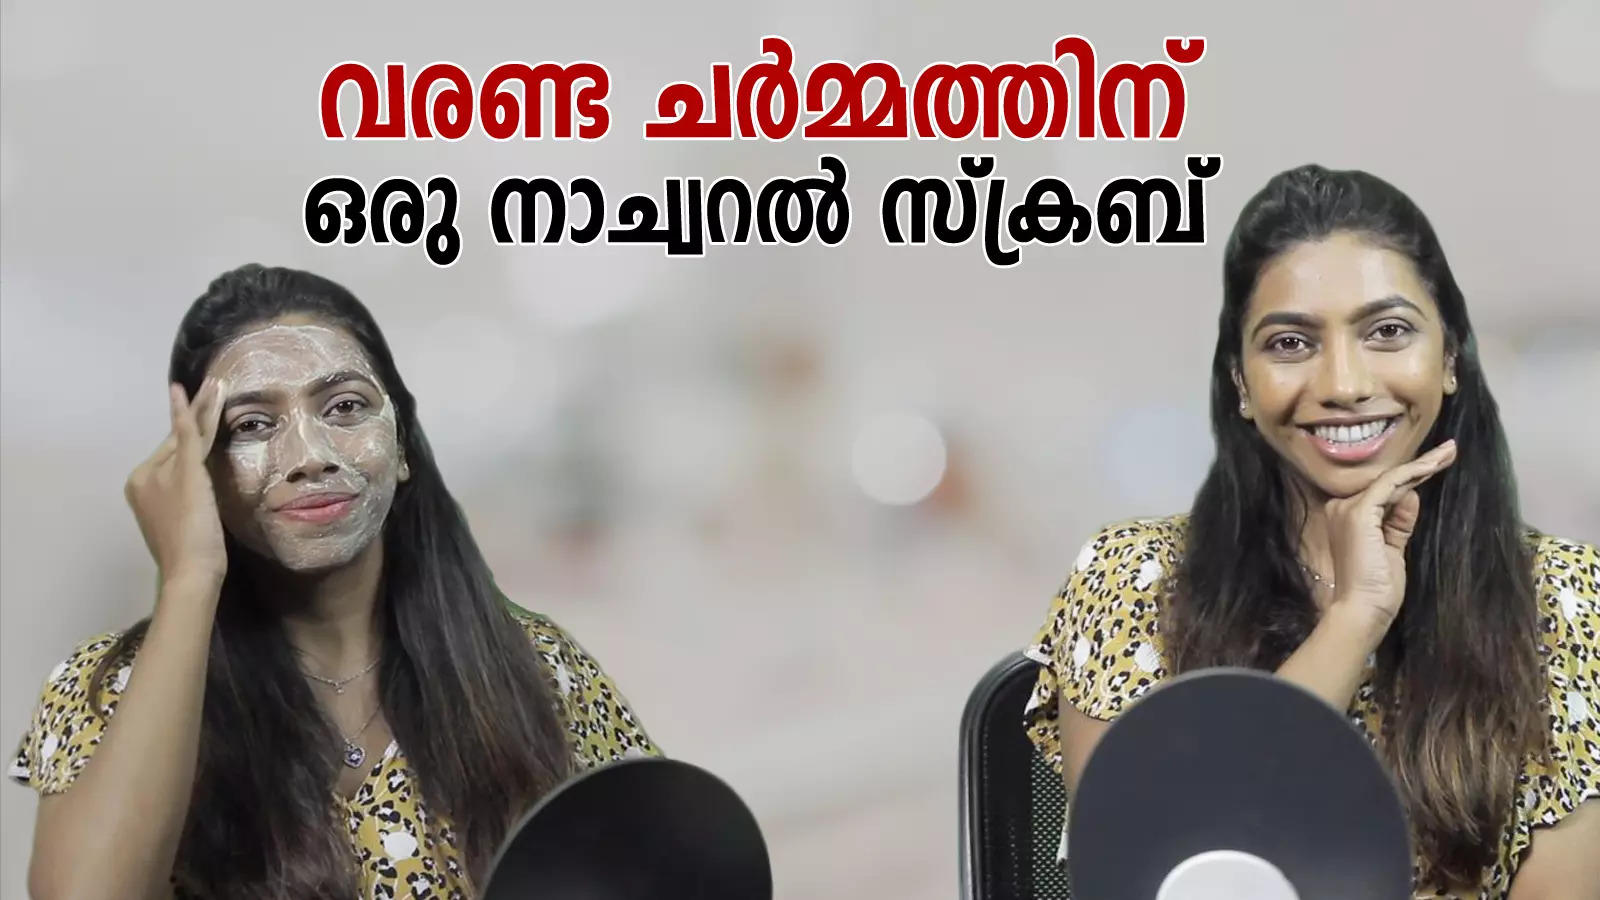 Unwanted Facial Hair, മുഖത്തെ അനാവശ്യരോമം നീക്കാൻ വീട്ടിലുണ്ട് മാർഗ്ഗങ്ങൾ -  natural methods to remove unwanted facial hair - Samayam Malayalam